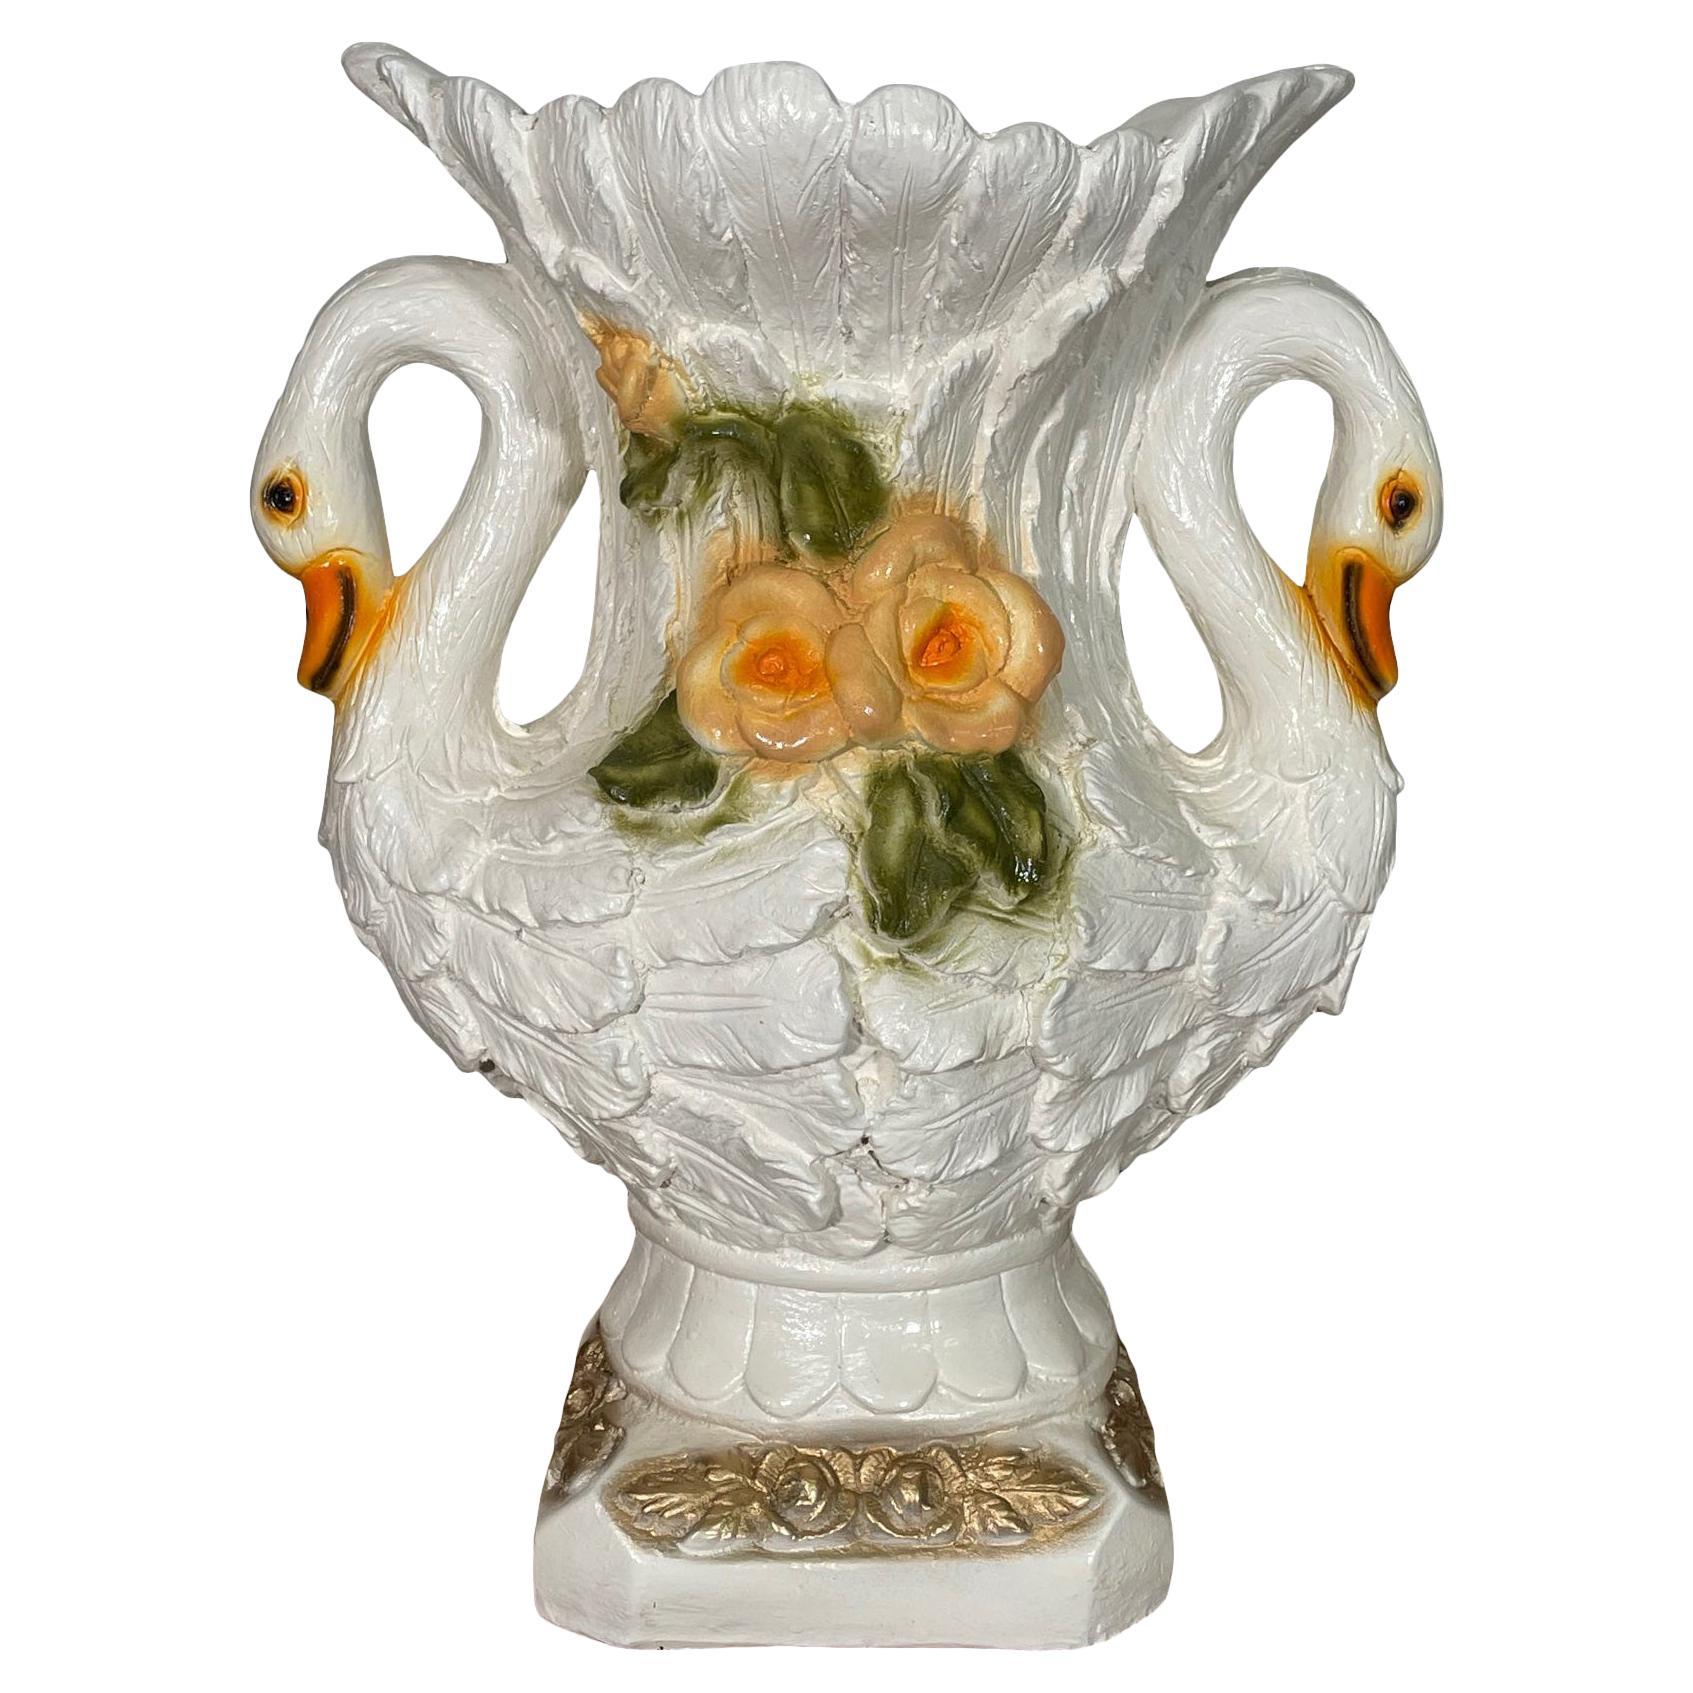 Vintage Swan Decor Retro Kitsch Mid Century Ceramic Double Swan Vase Kitschy Swan Vase With Flower Embellishment.